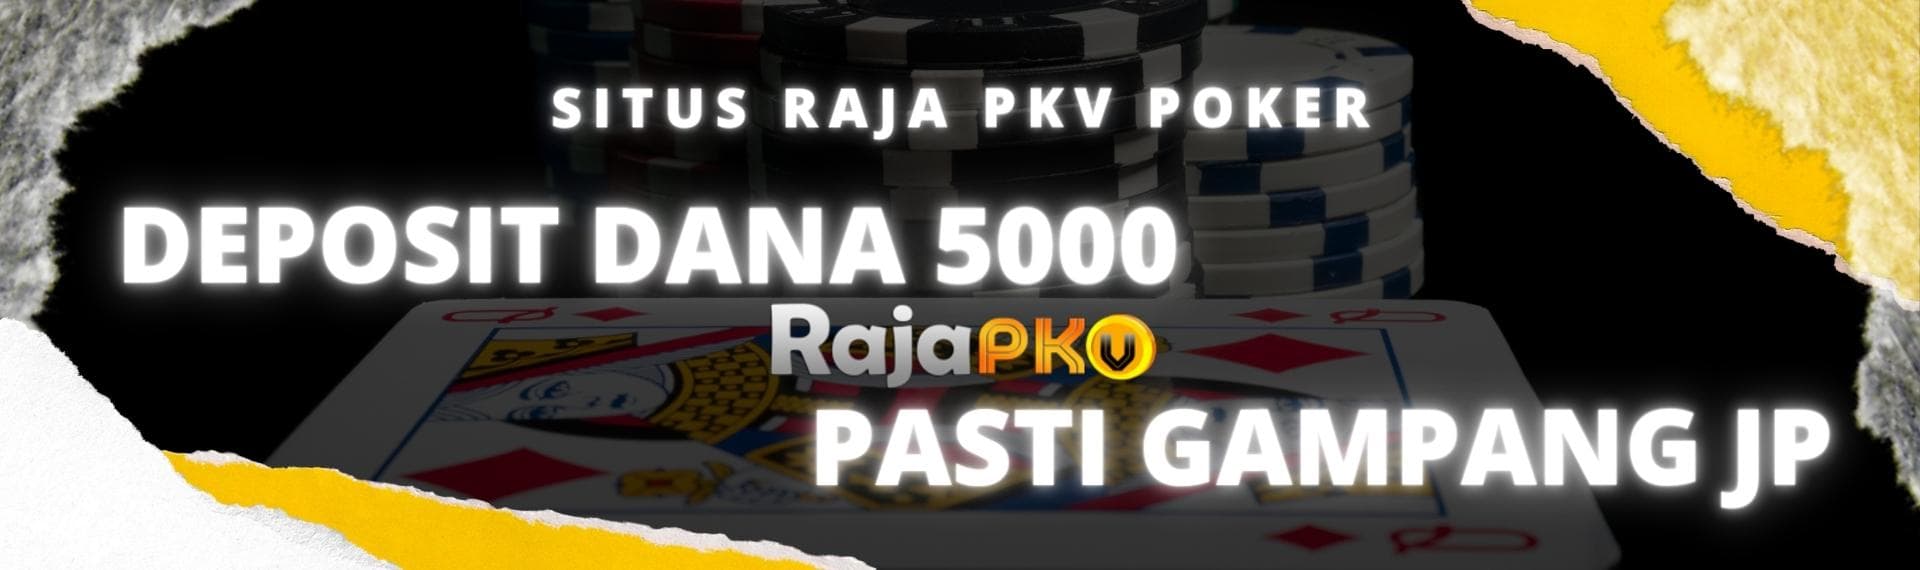 situs-raja-pkv-poker-deposit-dana-5000-pasti-gampang-jp-rajapkv.jpeg?962cf1f641757a4c046d1feac07303aa